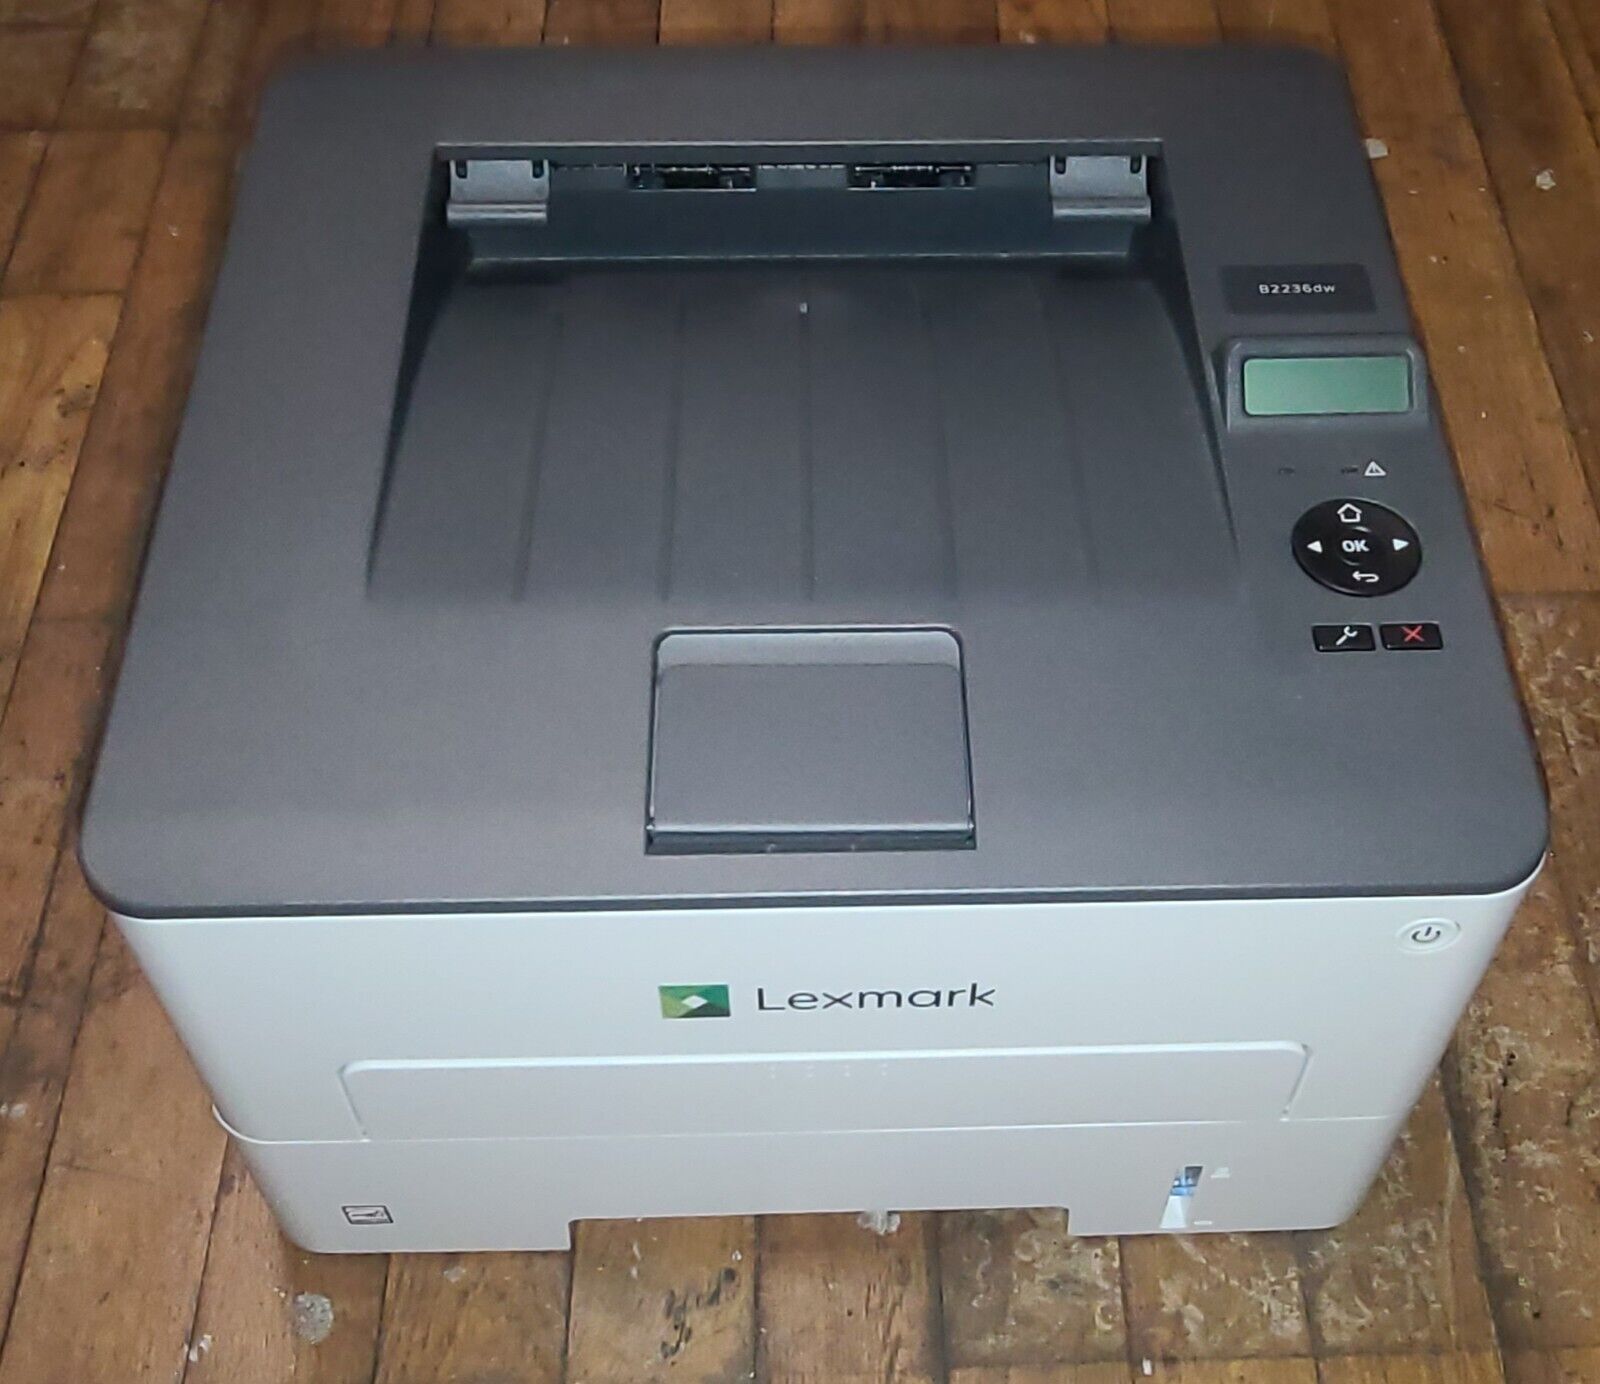 Lexmark B2236dw Wireless Monochrome Laser Printer TESTED & WORKS